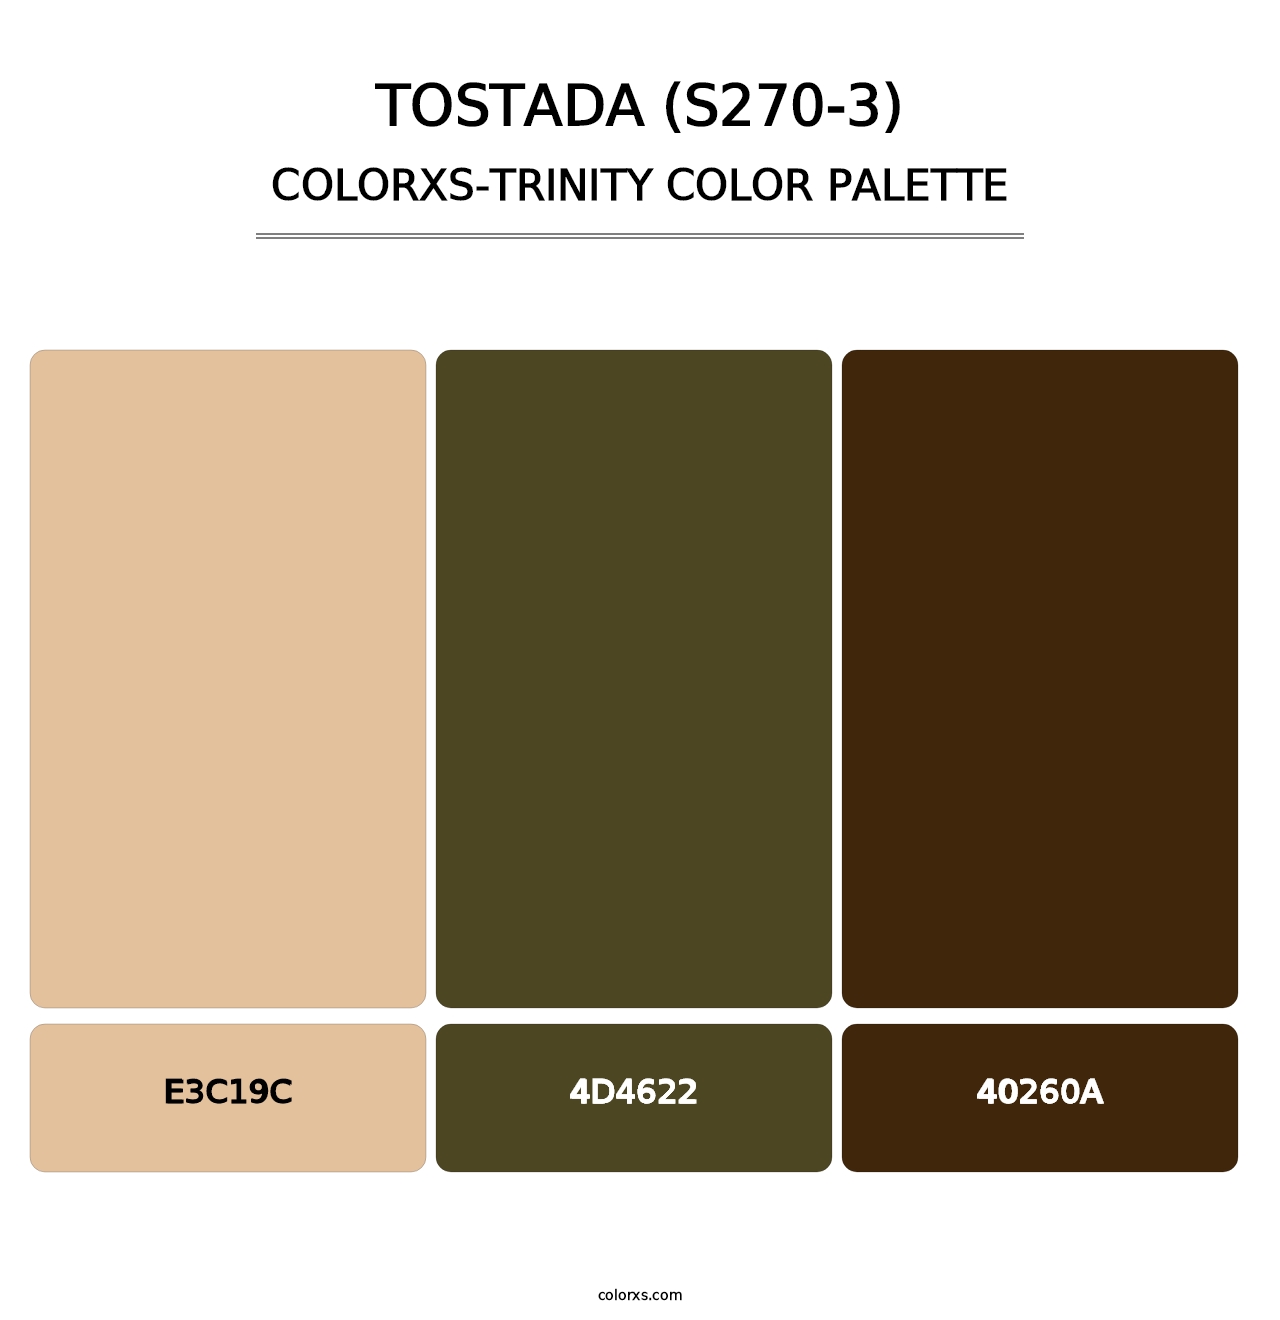 Tostada (S270-3) - Colorxs Trinity Palette